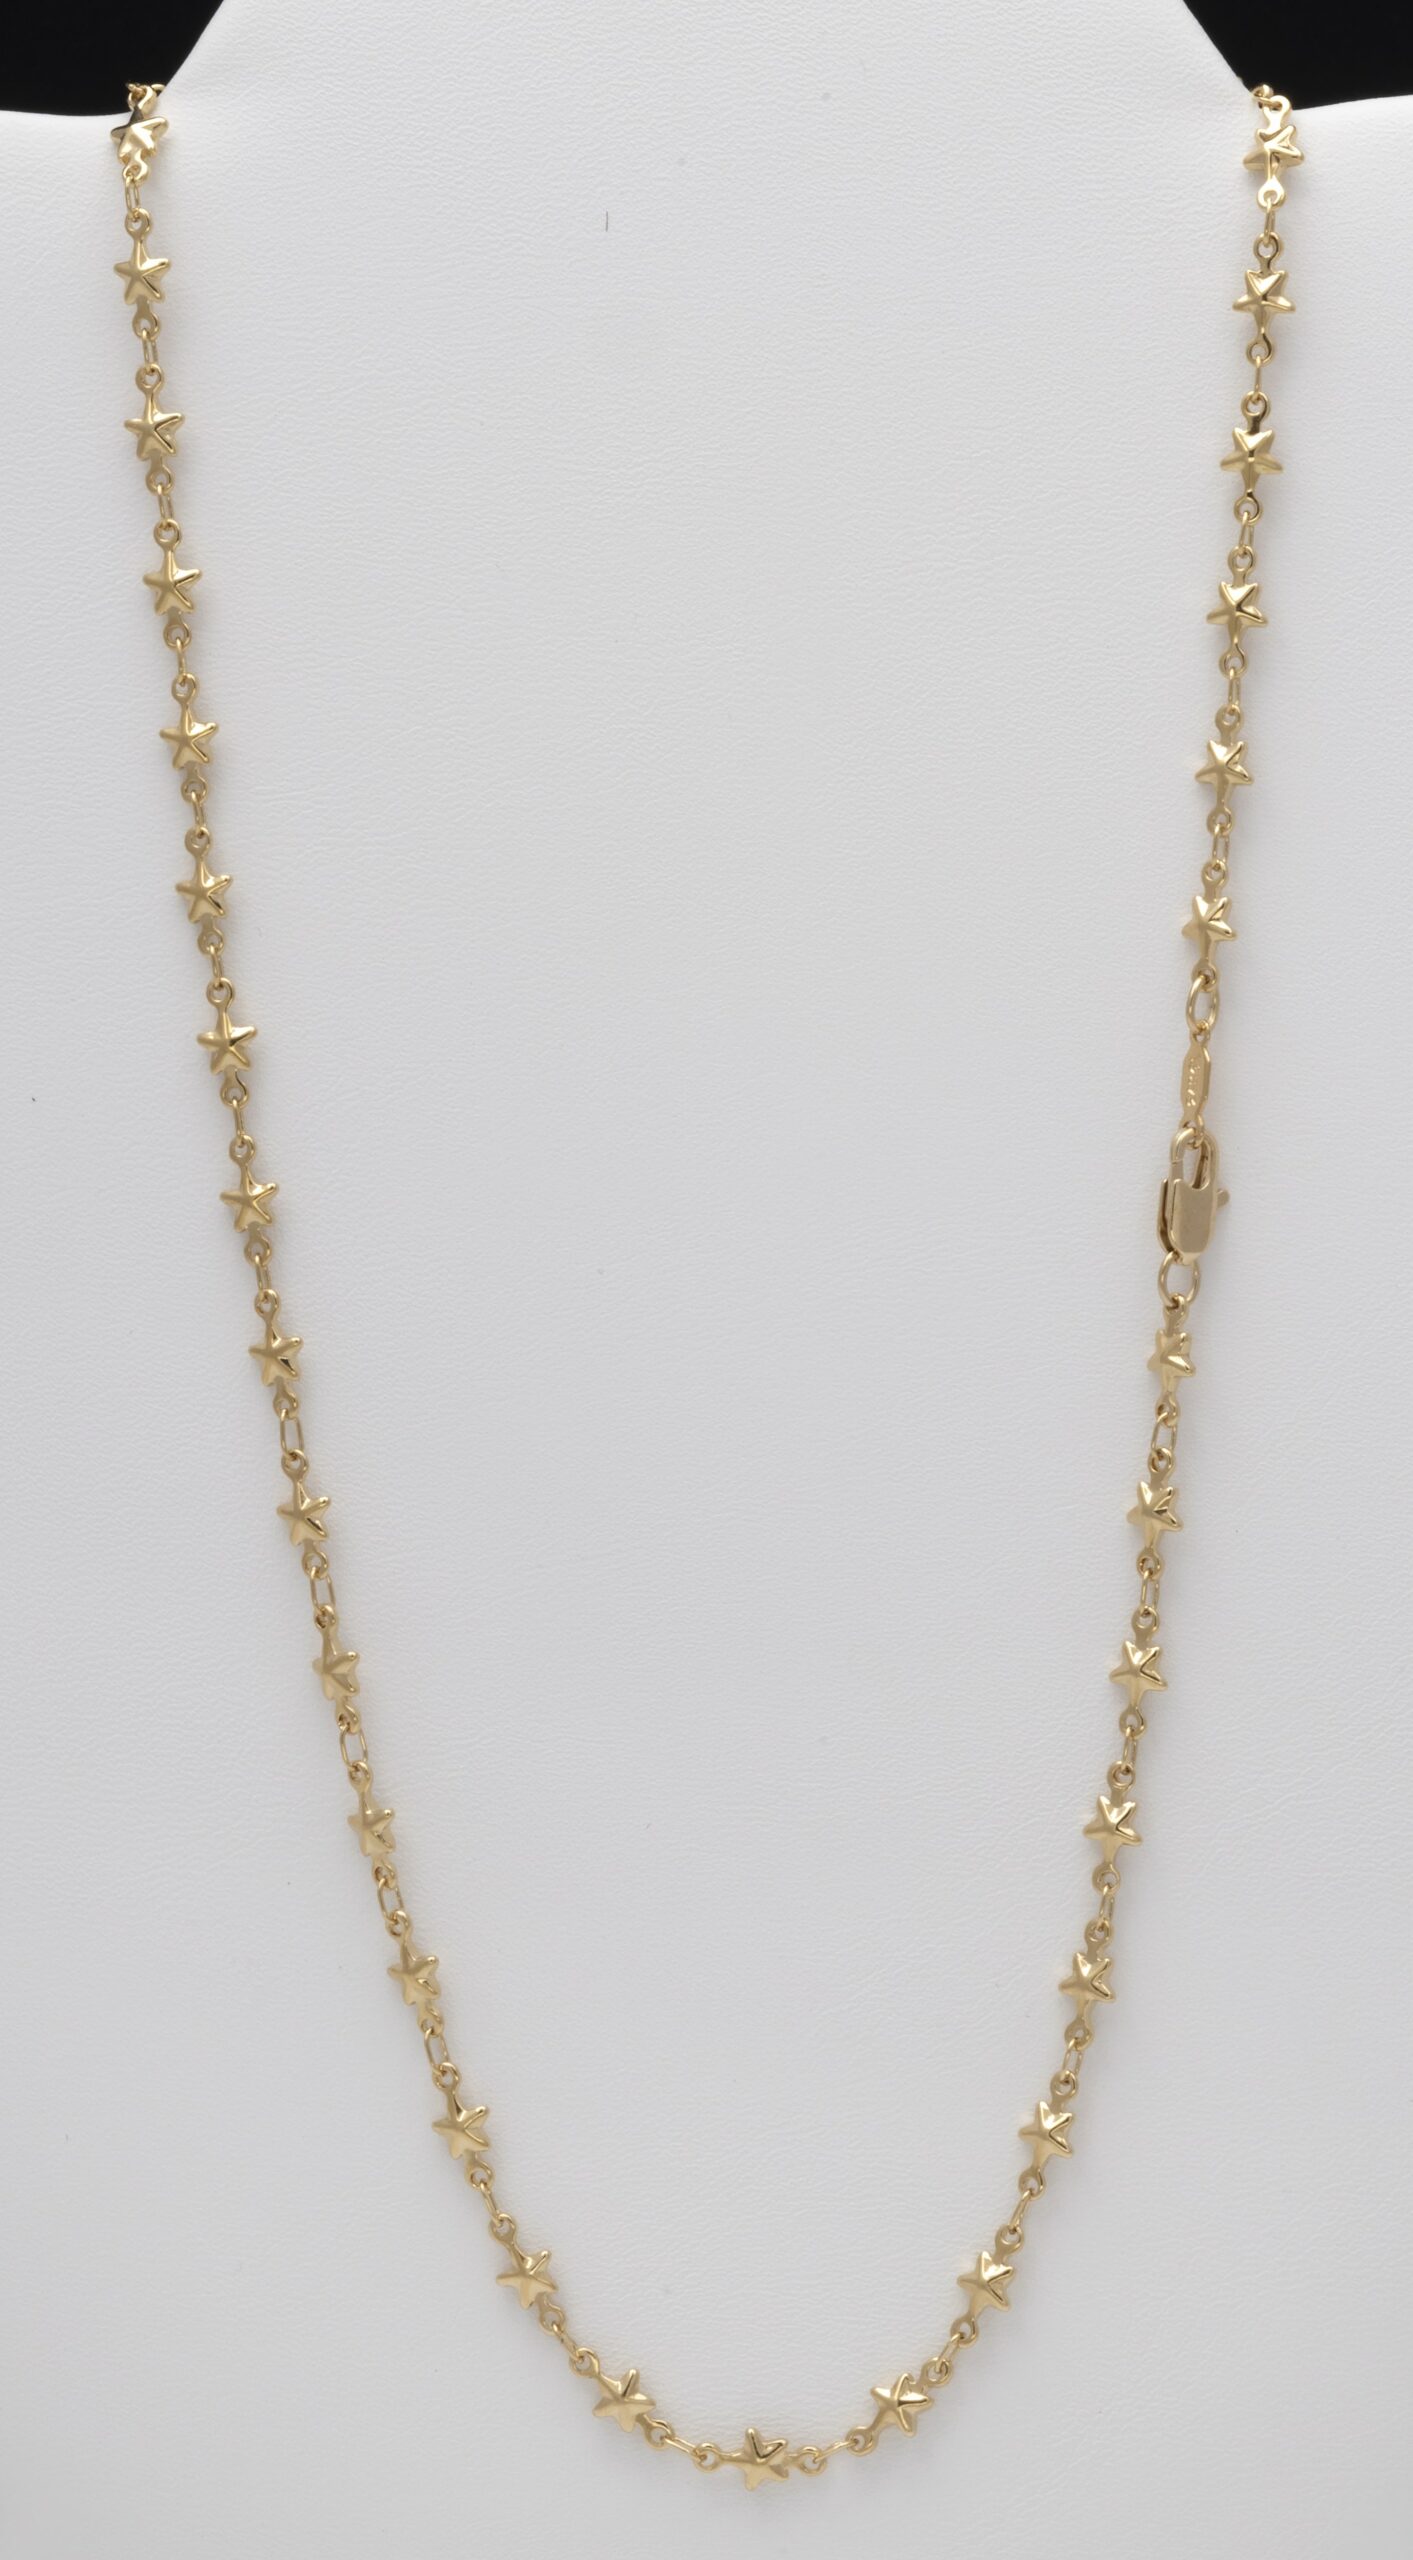 100 | Star Link Chain · Goldfathers Jewelry